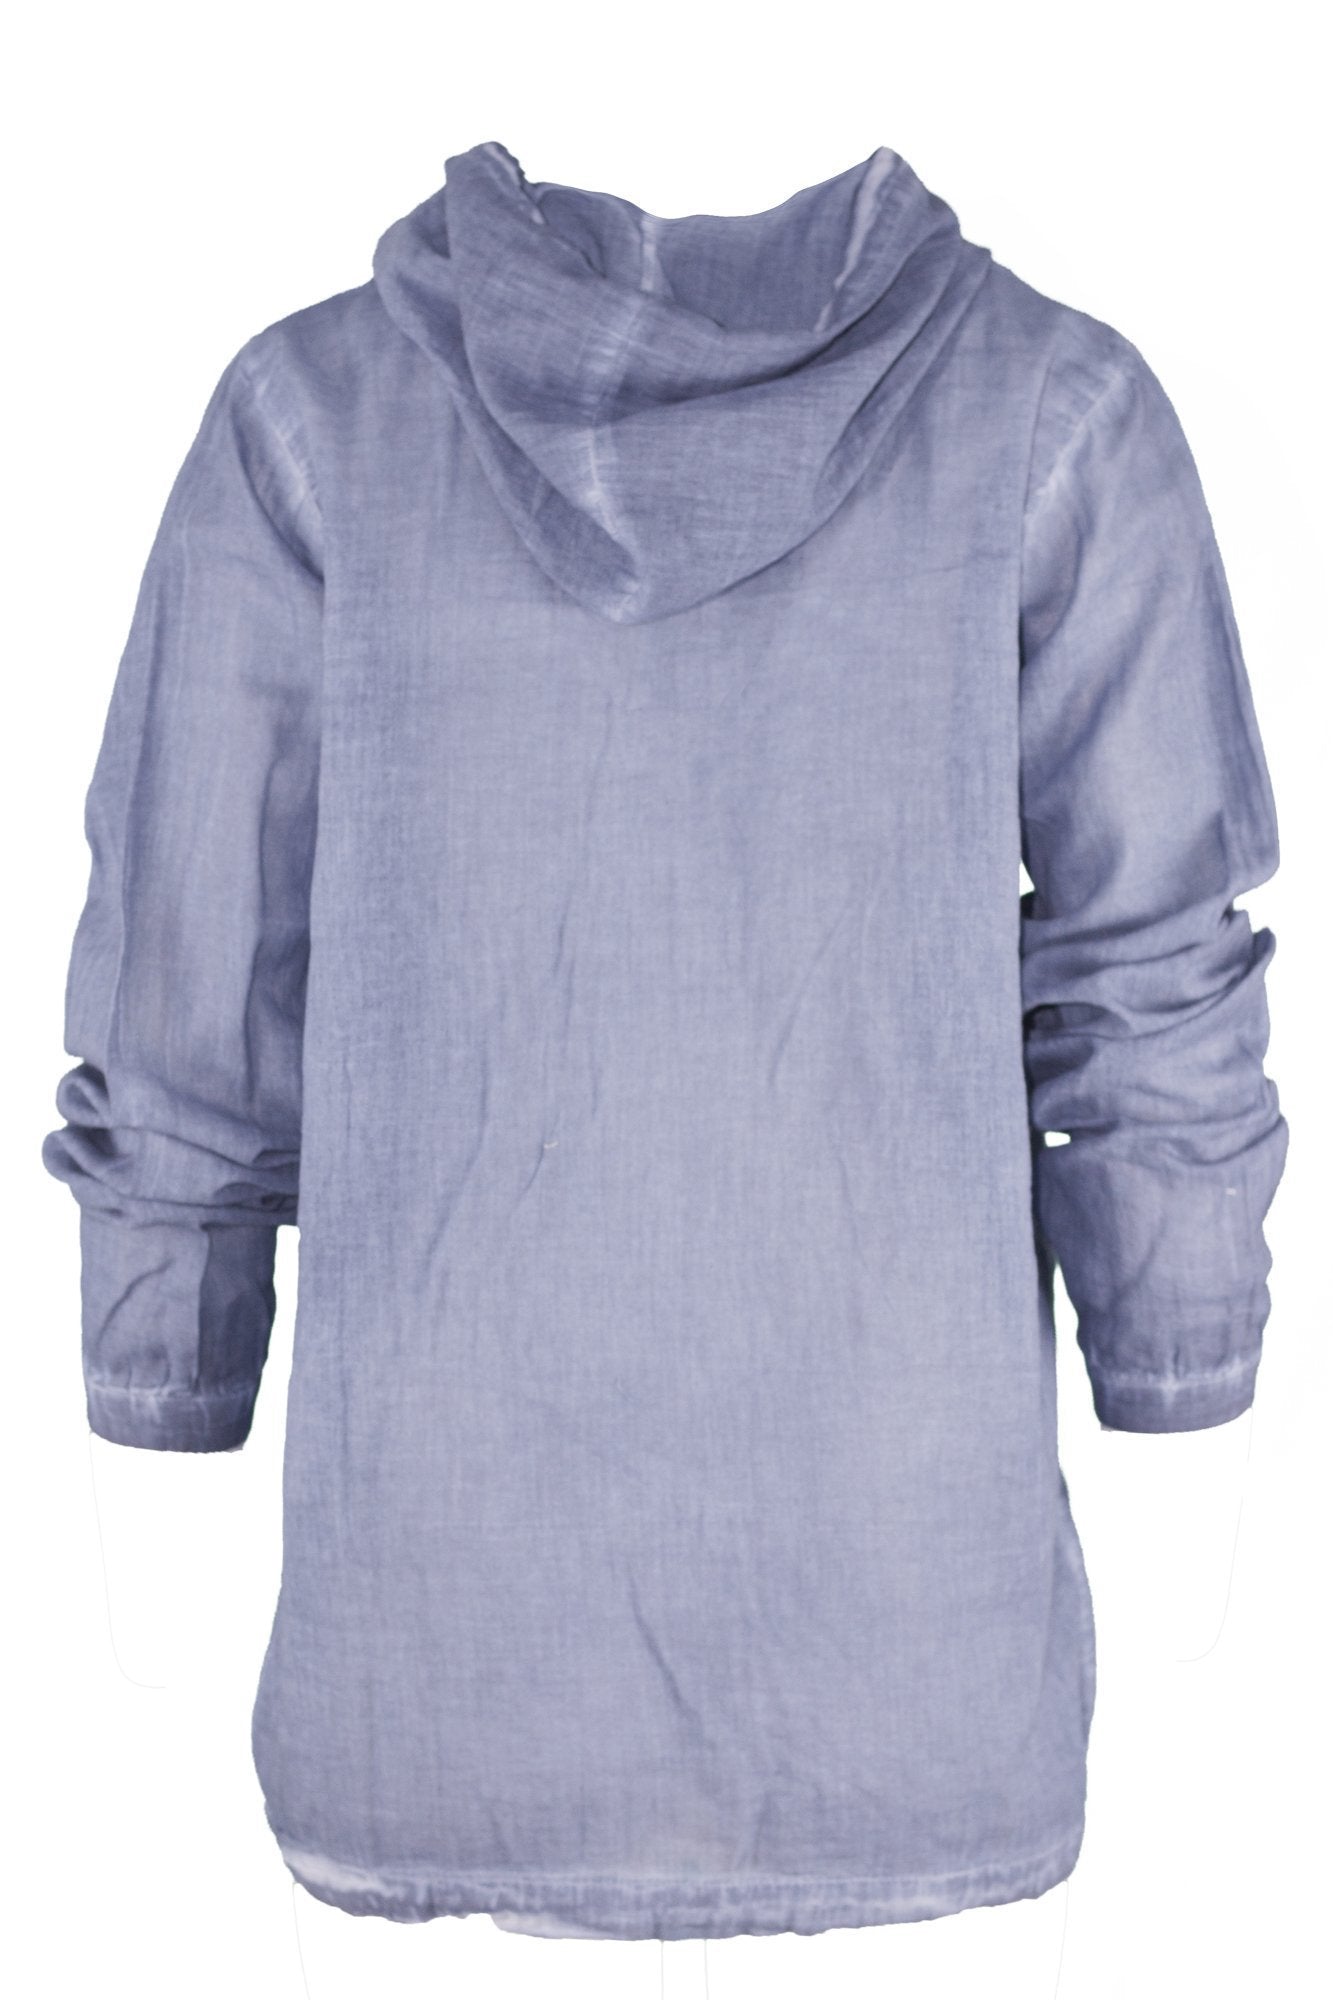 garment dyed denim color shirt with hood top ipekci 